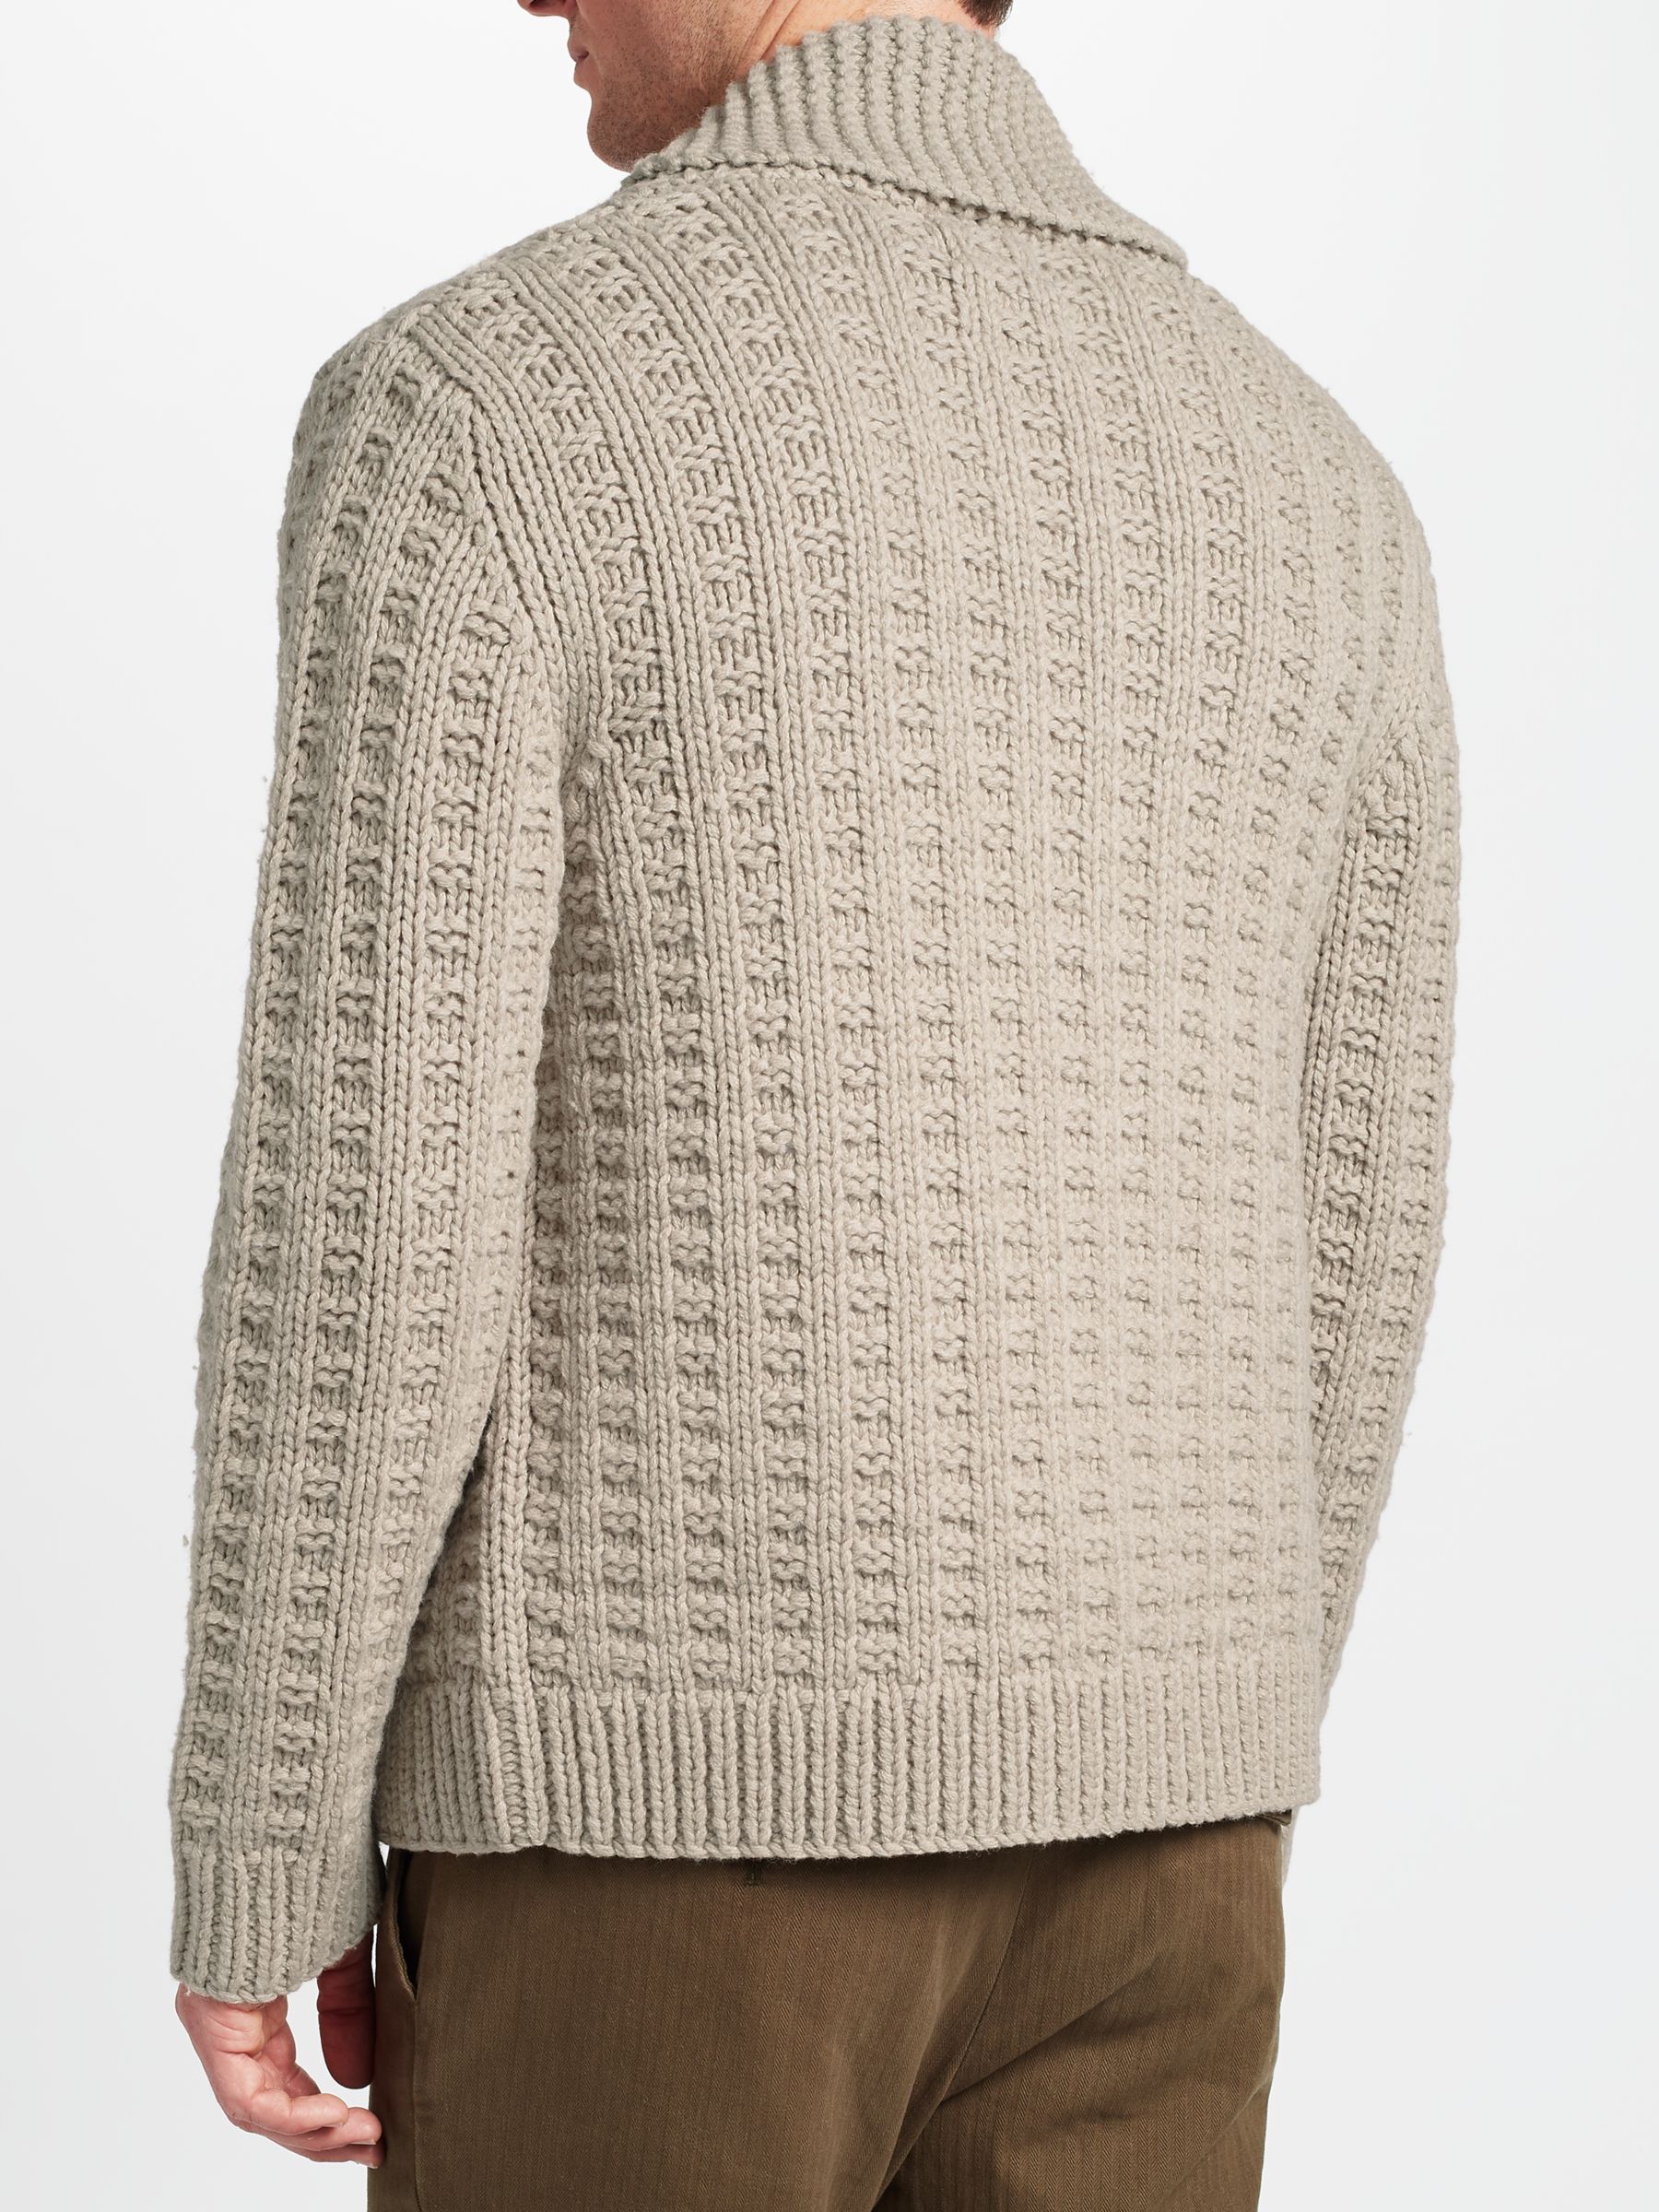 JOHN LEWIS & Co. Hand Knit Cardigan, Grey